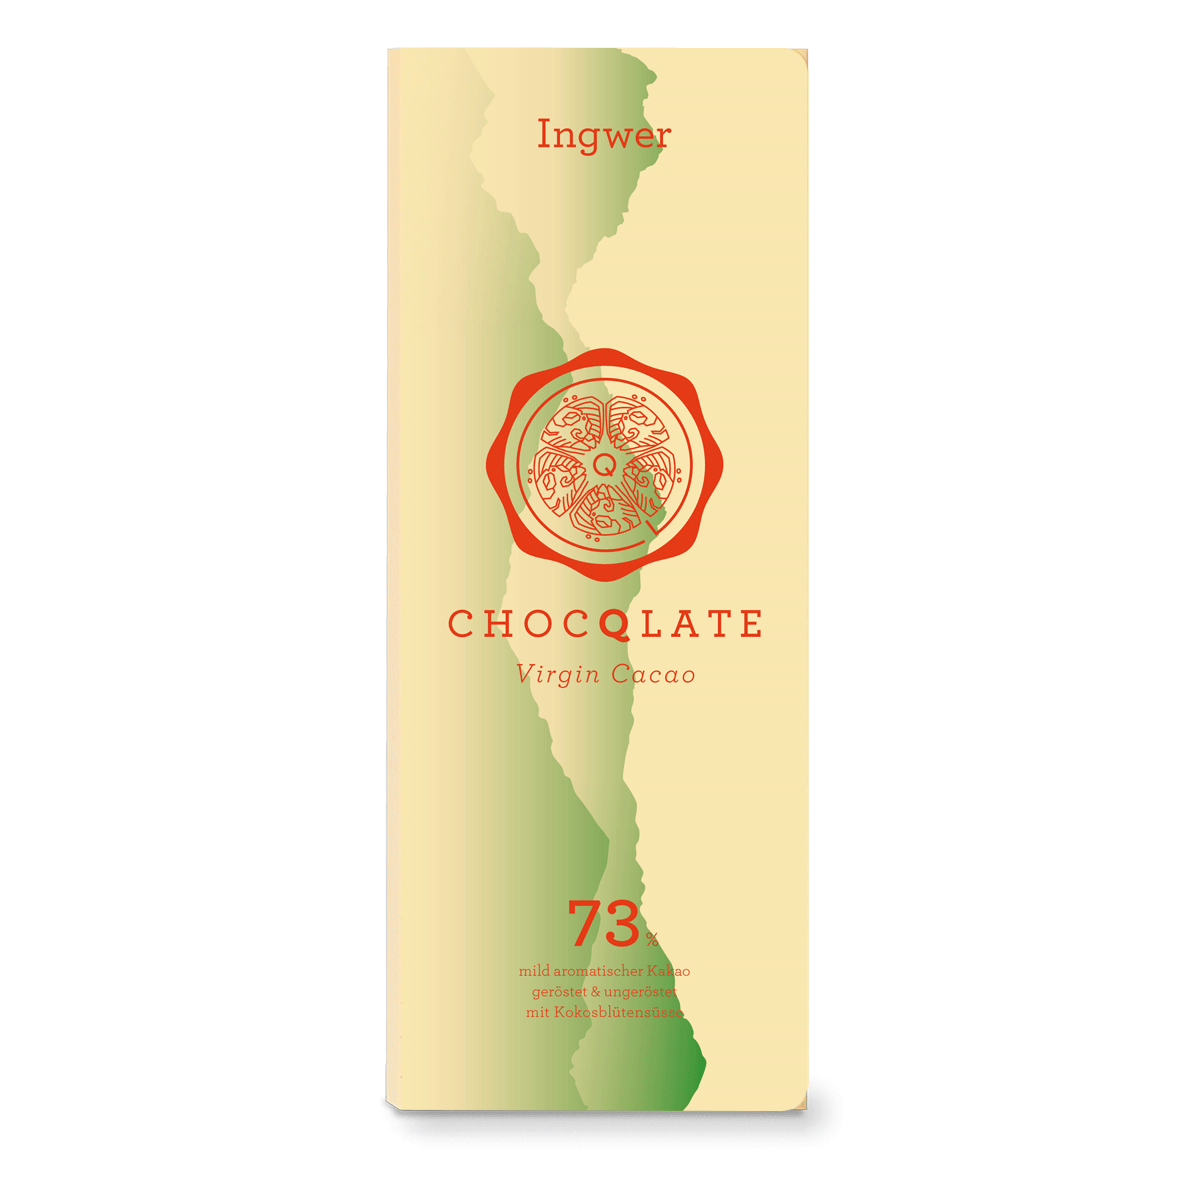 CHOCQLATE chocolate orgánico y jengibre con cacao virgen